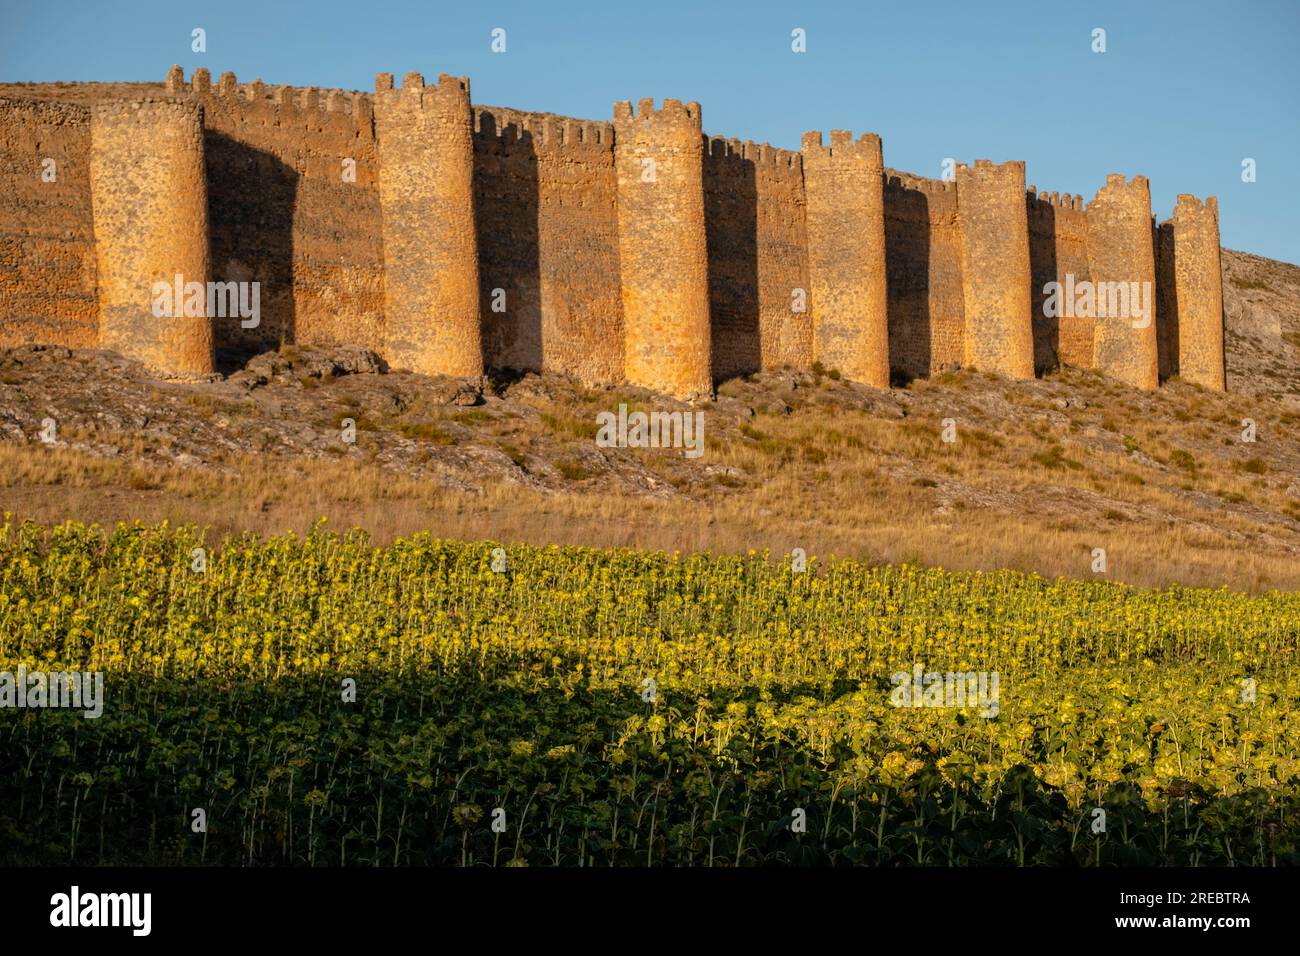 old fence, X-XII centuries, 15th century castle, Berlanga de Duero, Soria,  autonomous community of Castilla y León, Spain, Europe Stock Photo